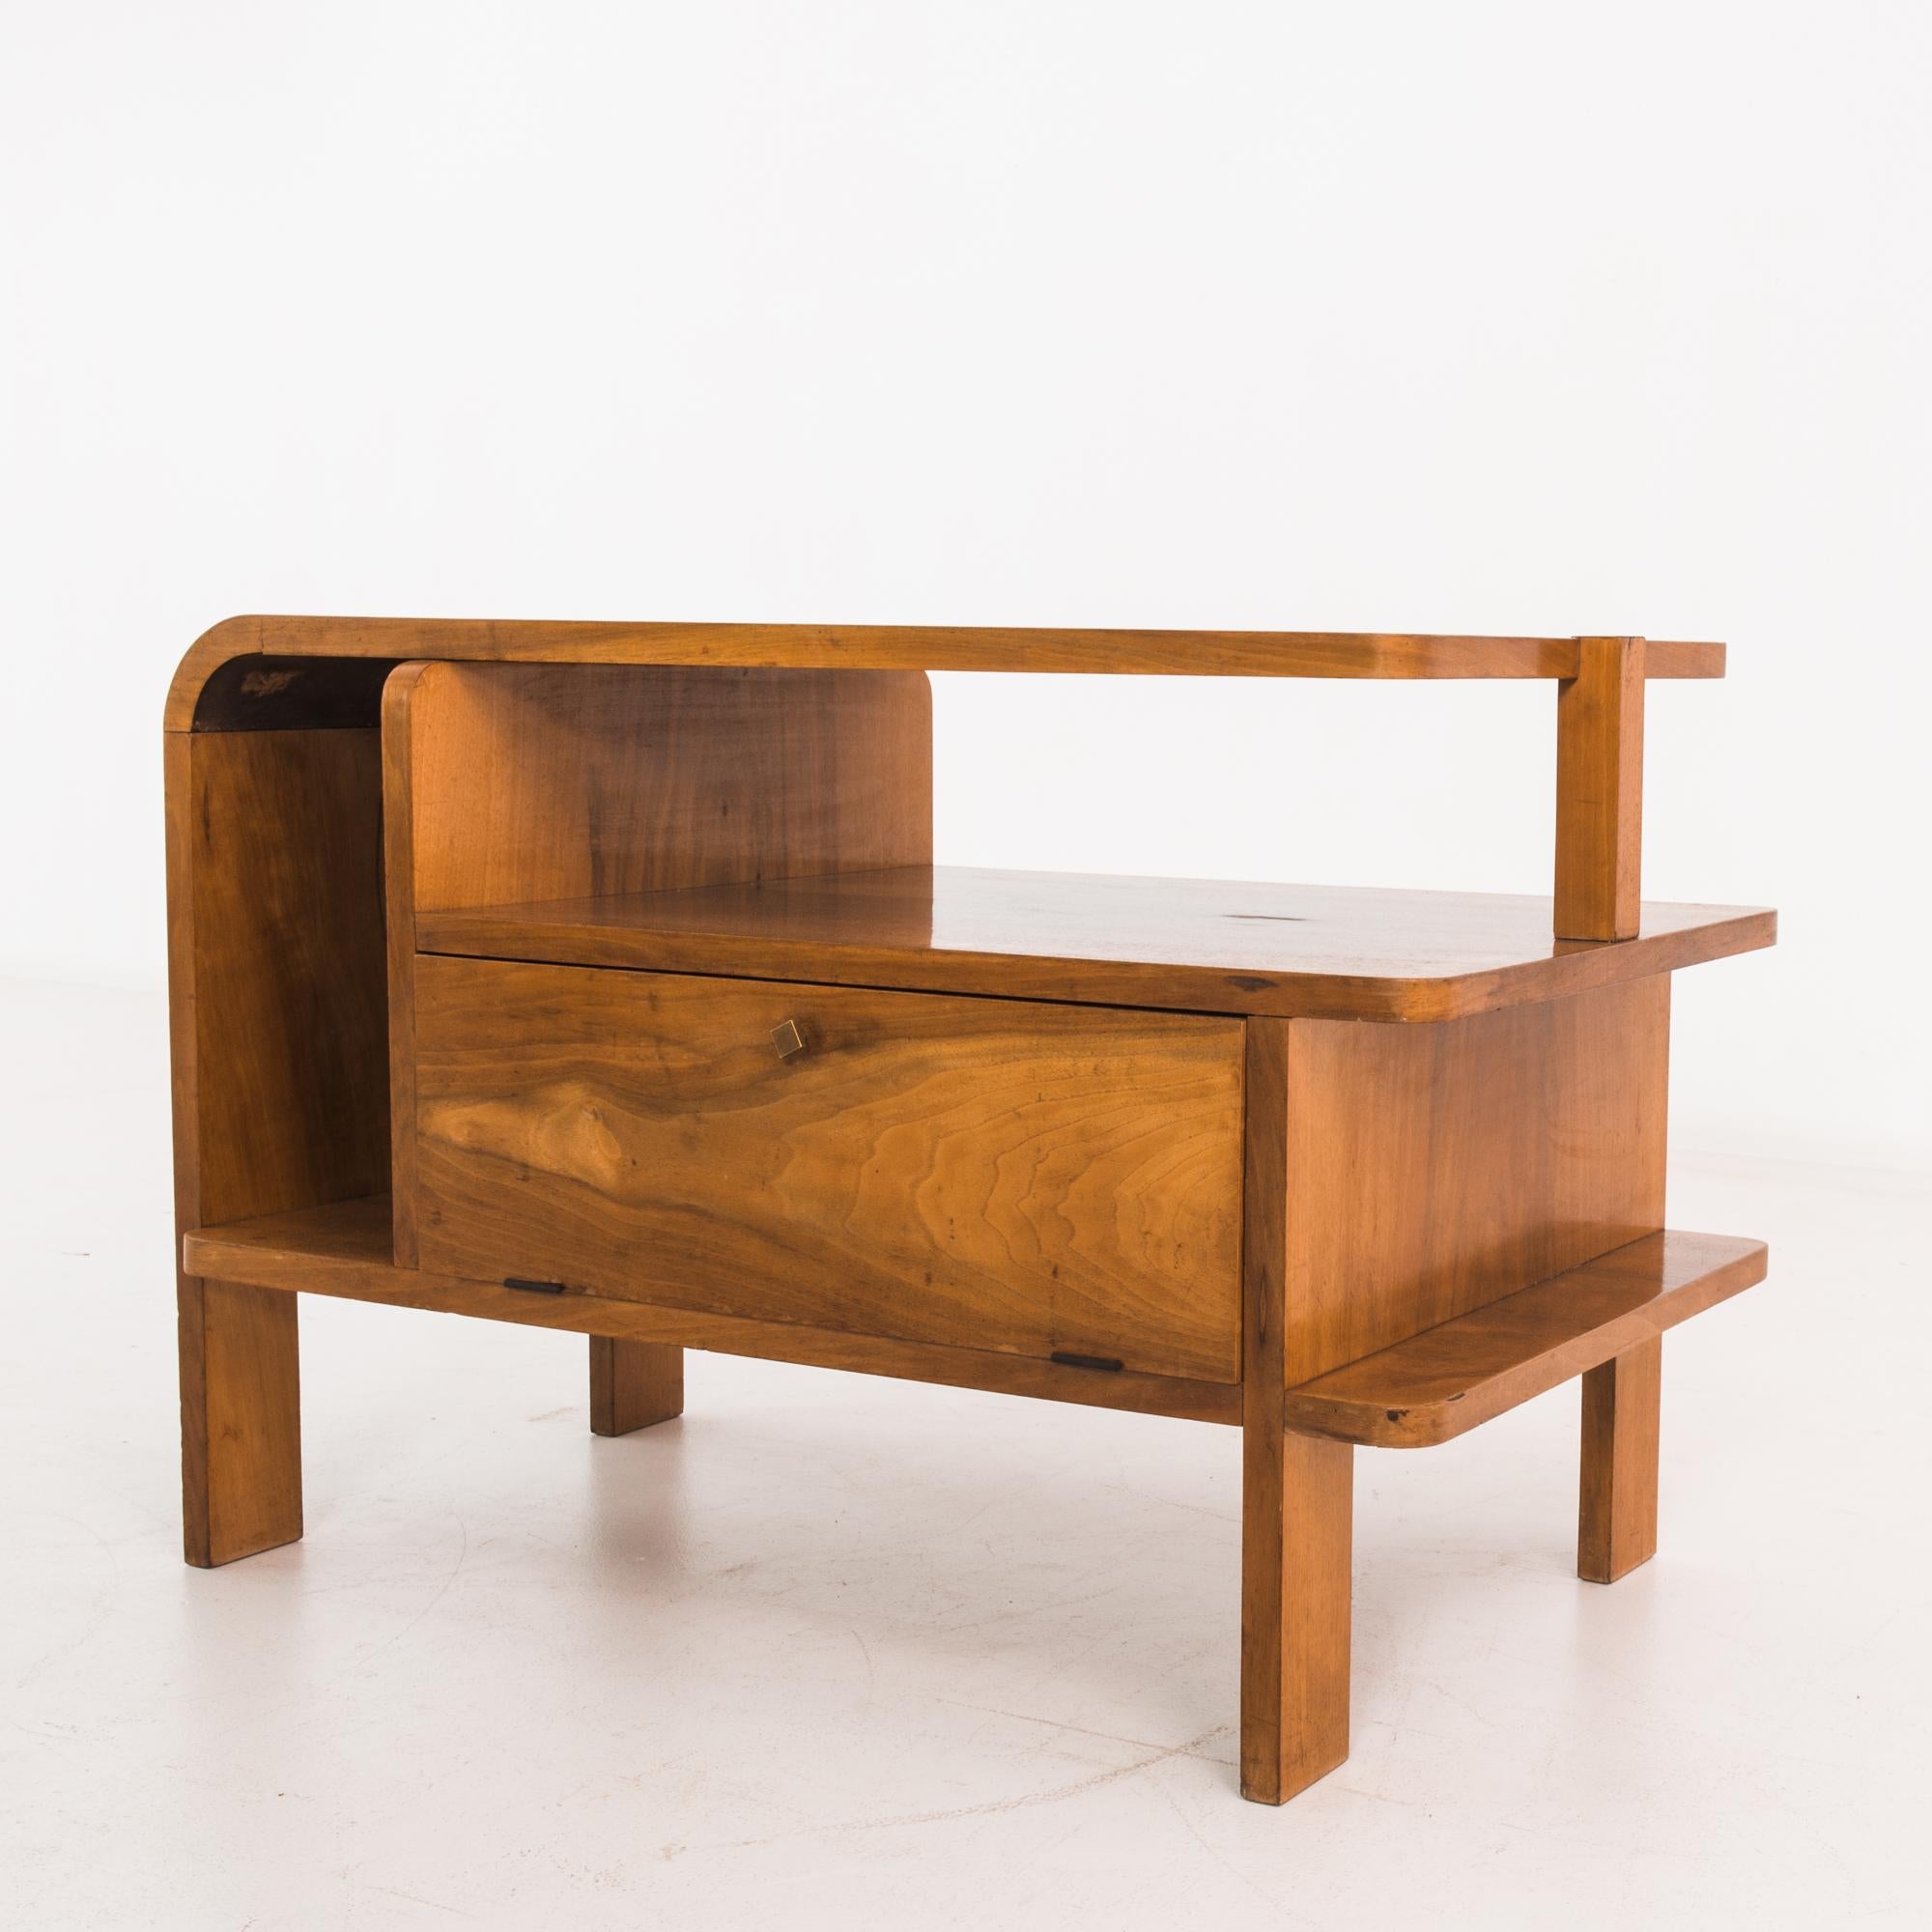 Hardwood 1930s Czech Modern Bedside Table